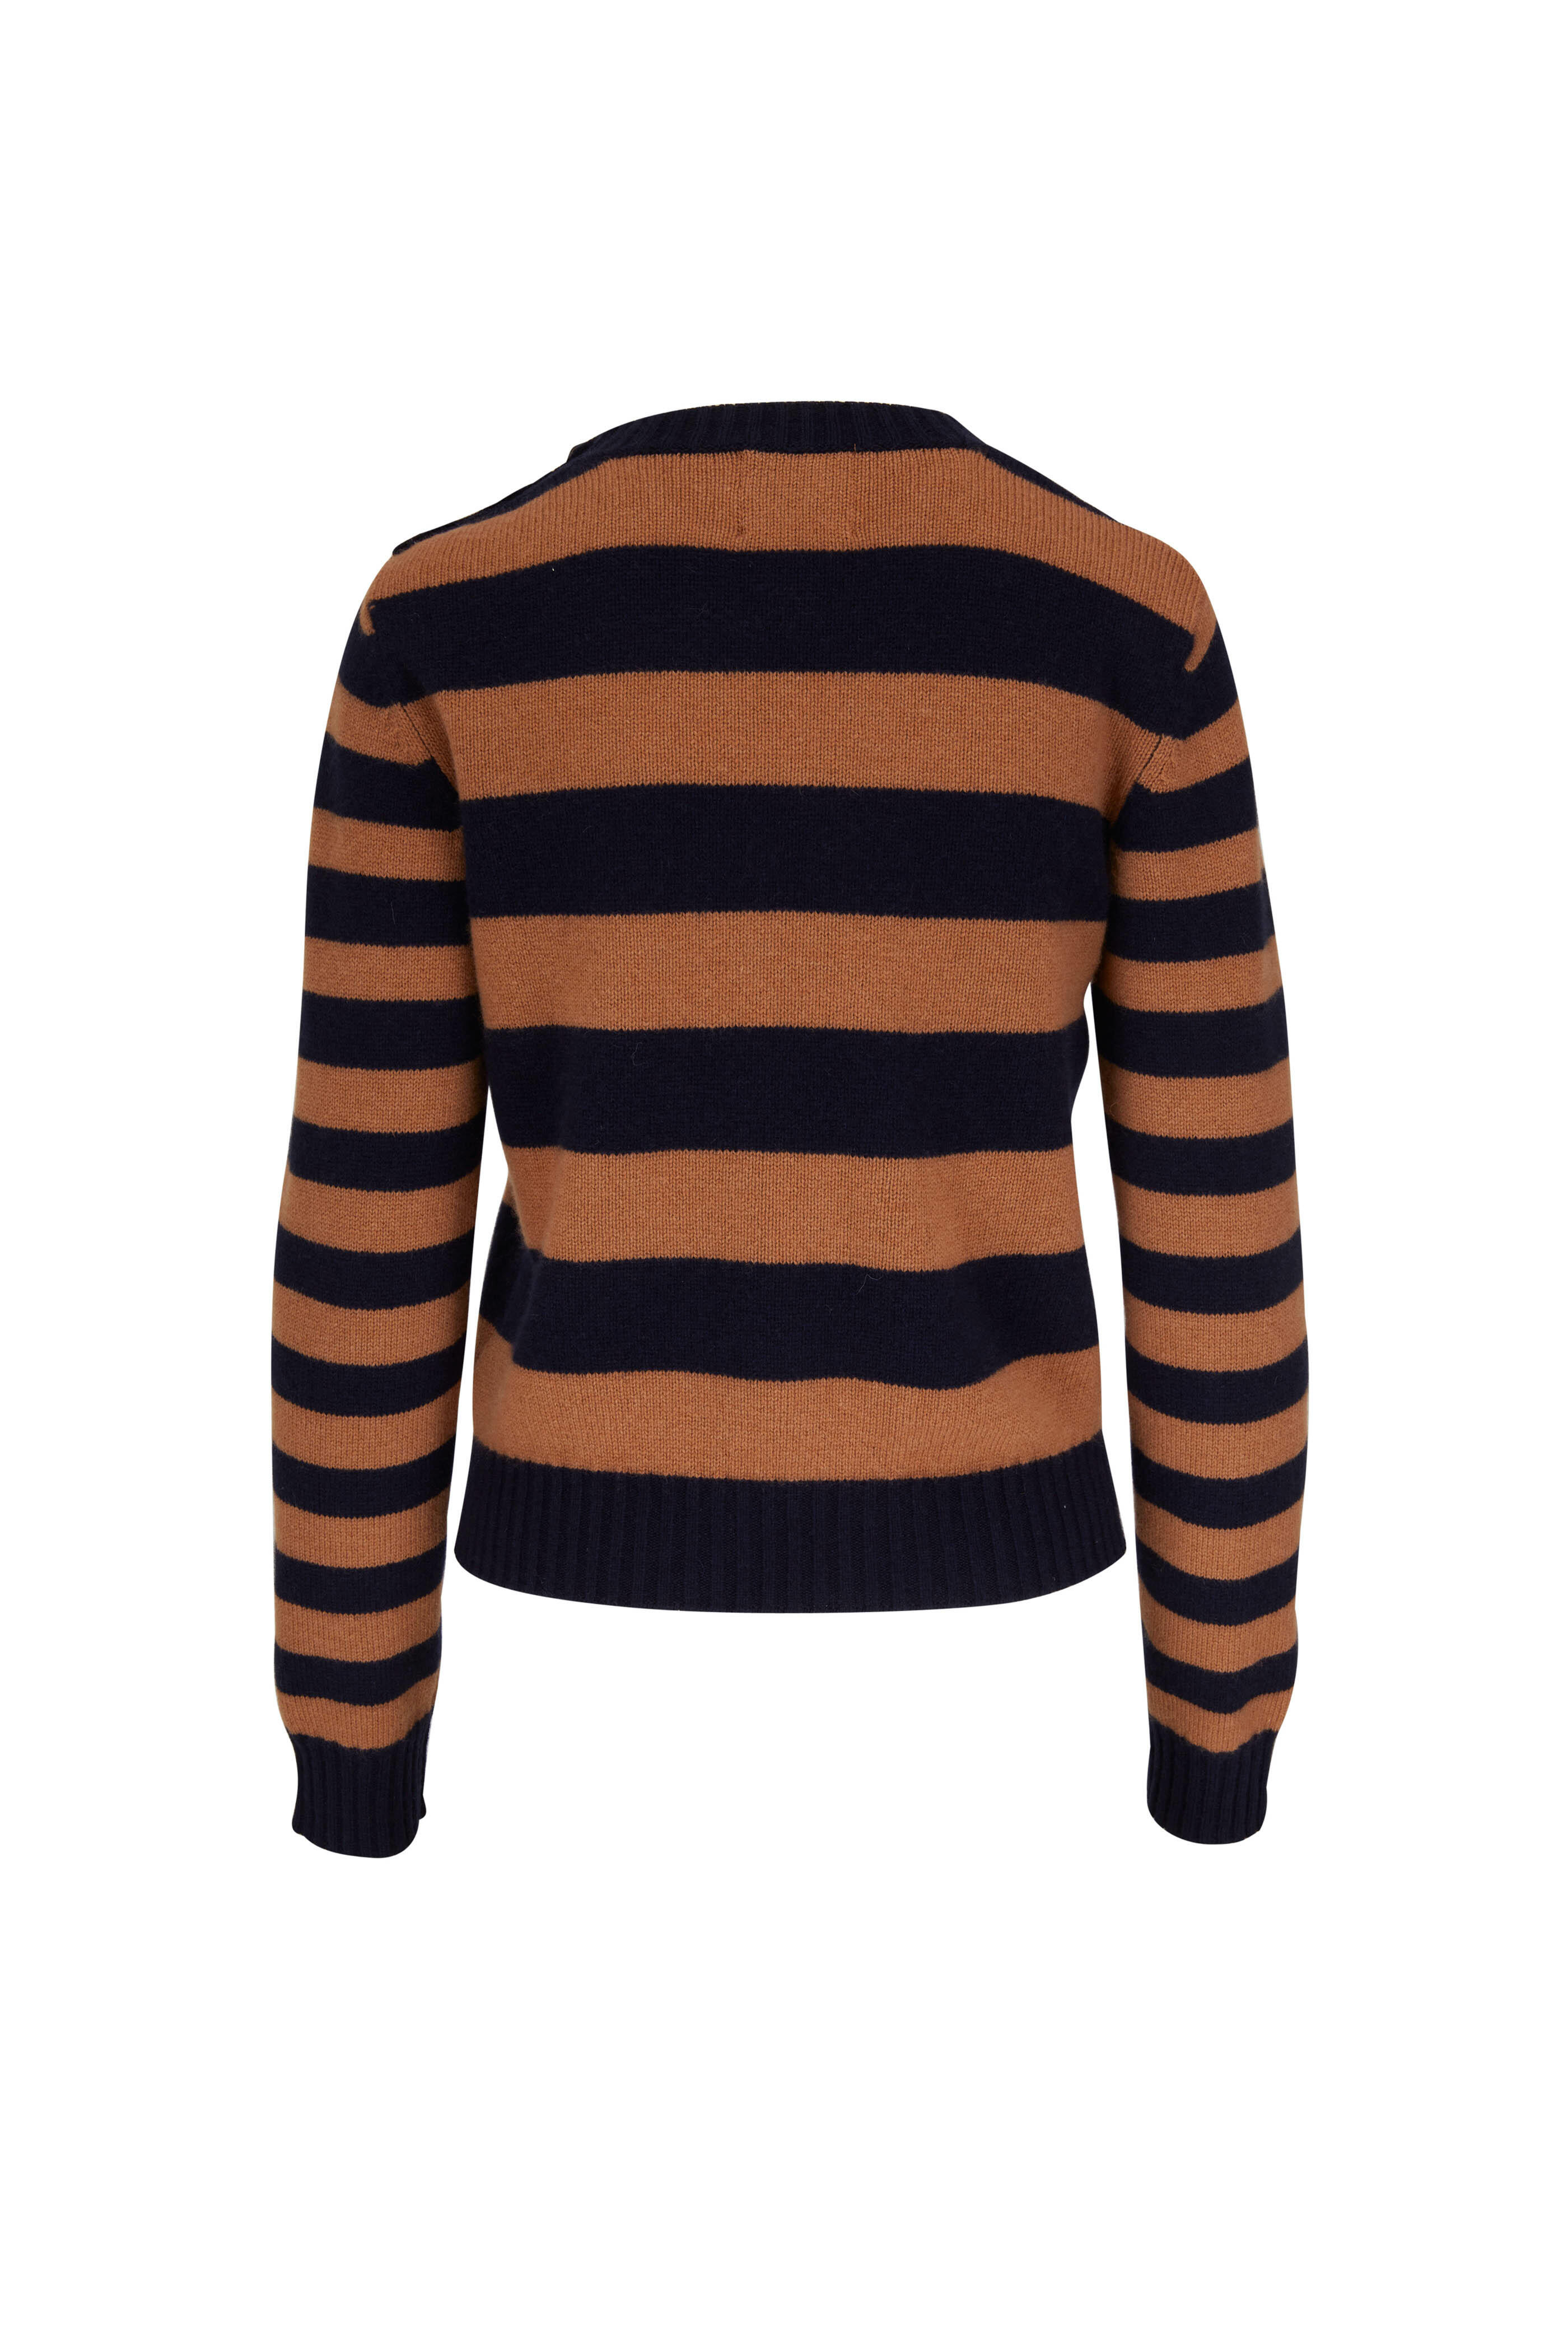 Stripe Cashmere - & Sweater Navy Camel 1234 Jumper